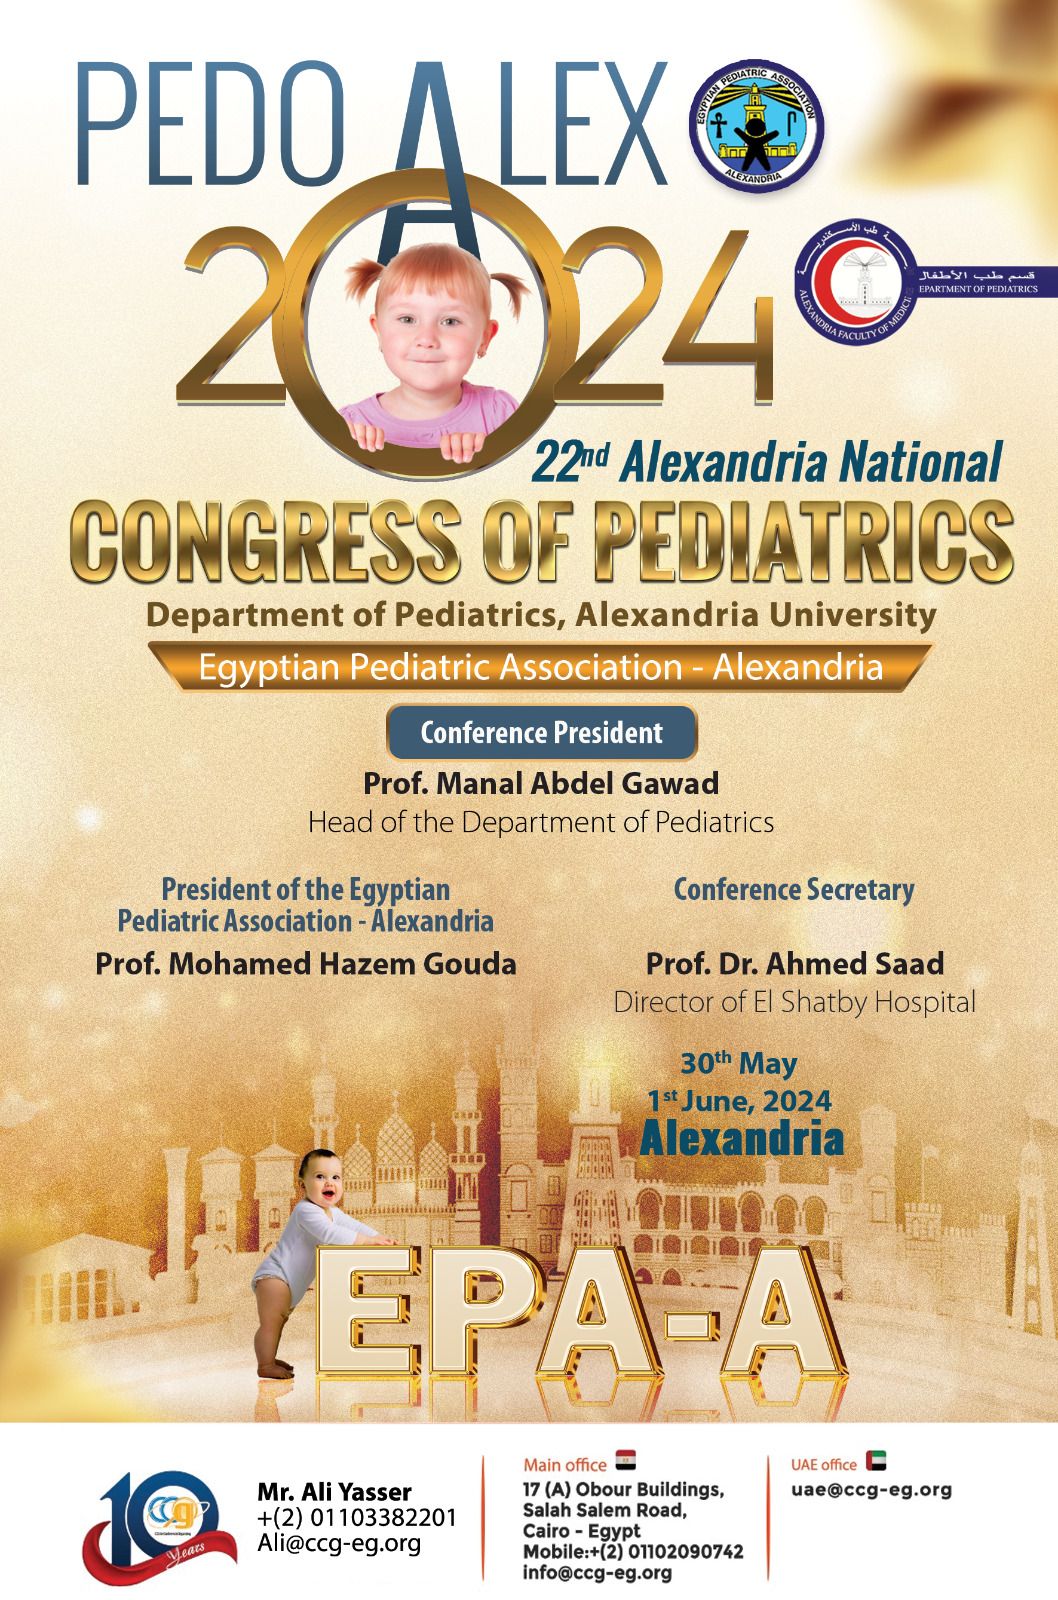 PEDO ALEX 2024, the 22nd Alexandria National Congress of Pediatrics Department of Pediatrics